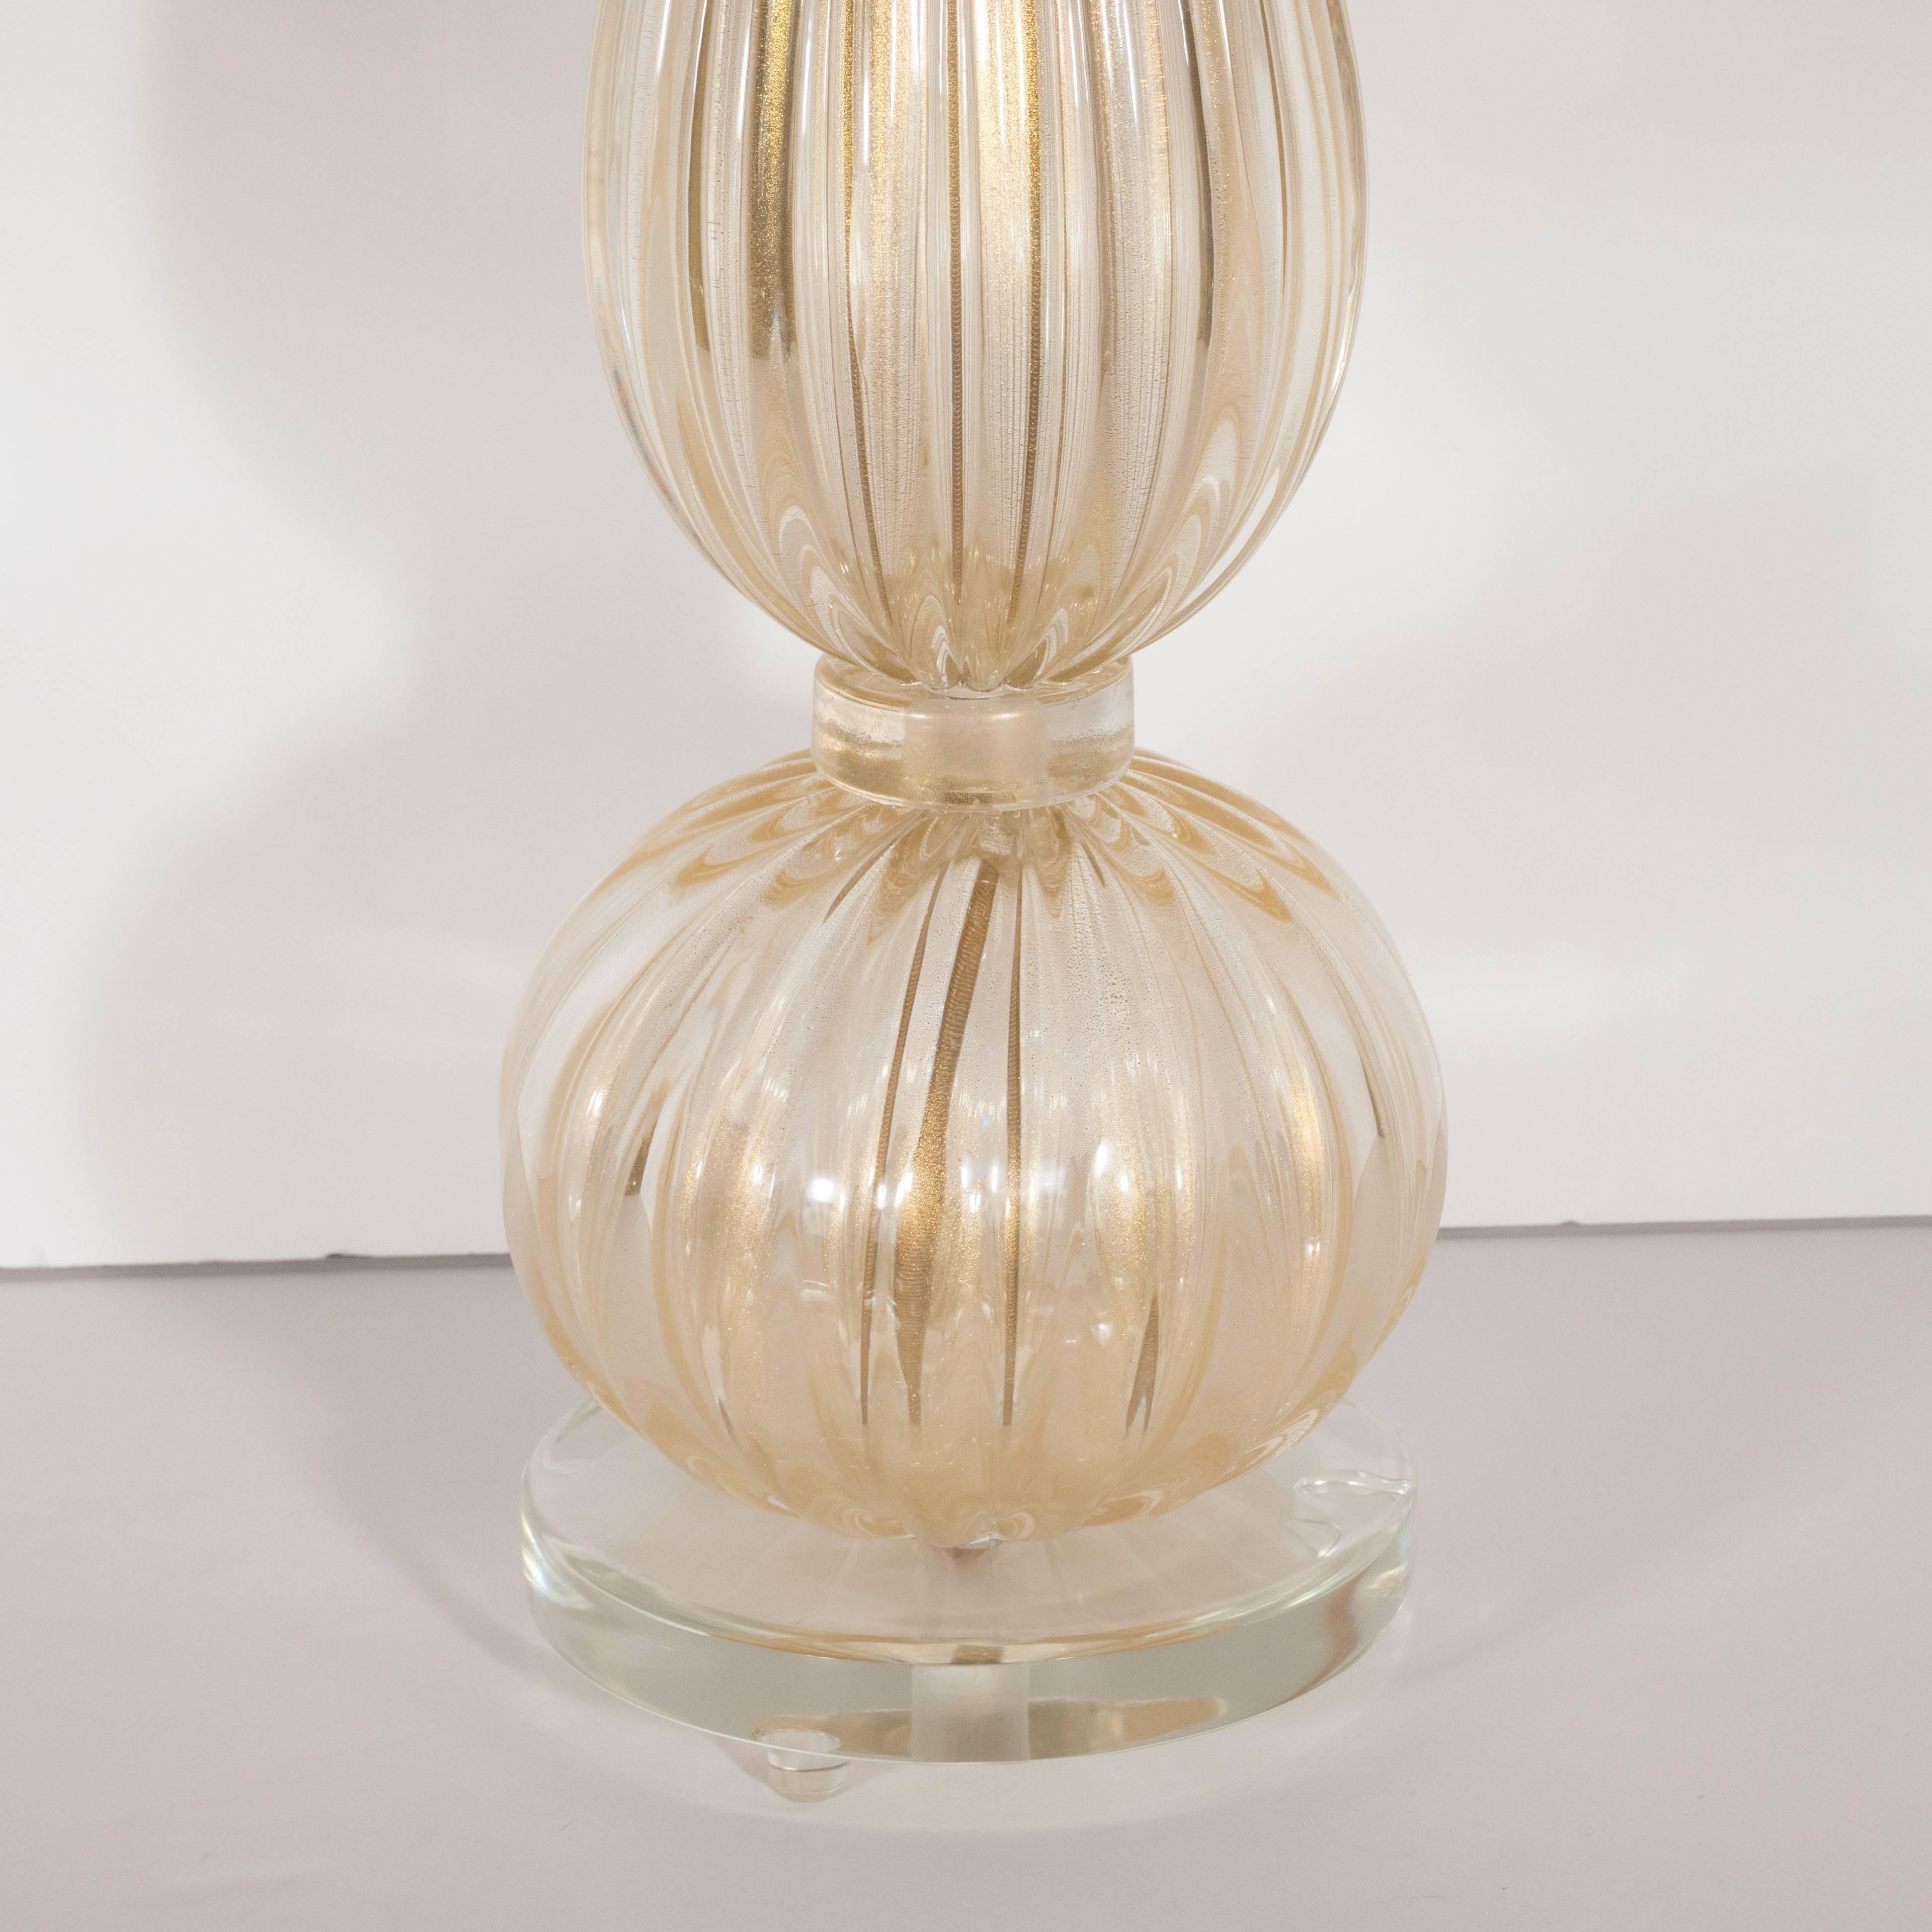 Contemporary Pair of Modernist Handblown Murano Glass Table Lamps with 24-Karat Gold Flecks